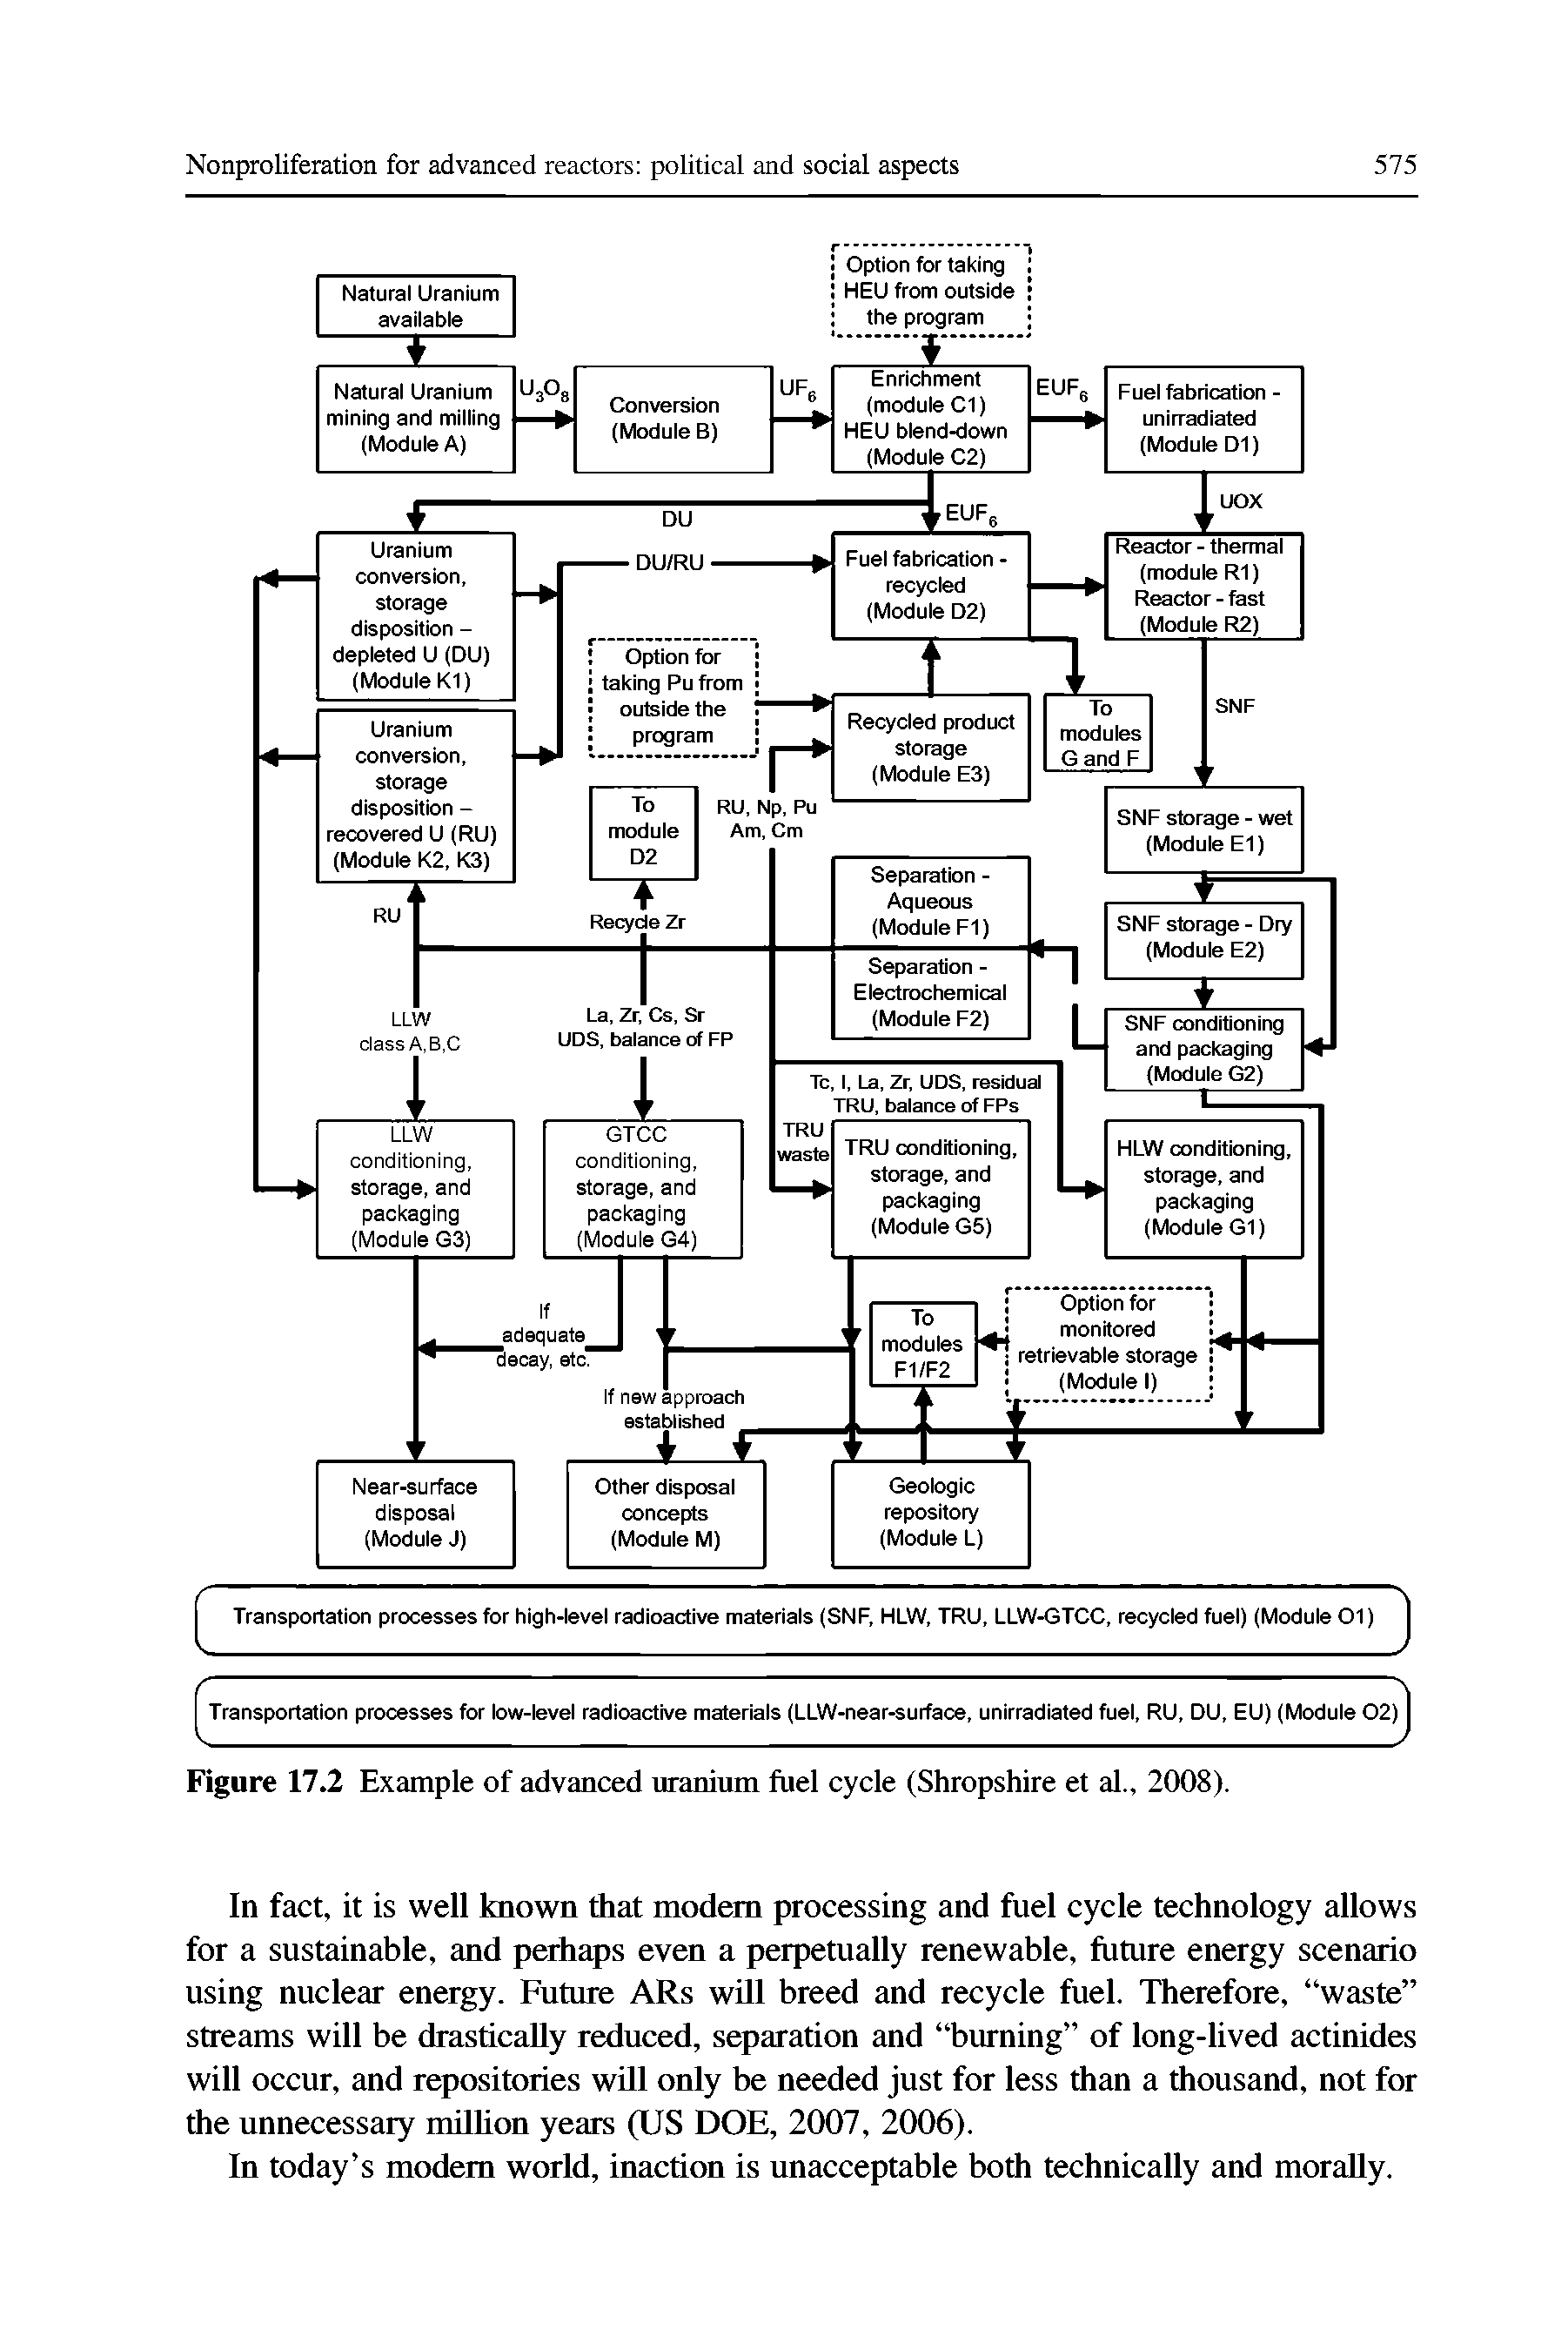 Figure 17.2 Example of advanced uranium fuel cycle (Shropshire et al., 2008).